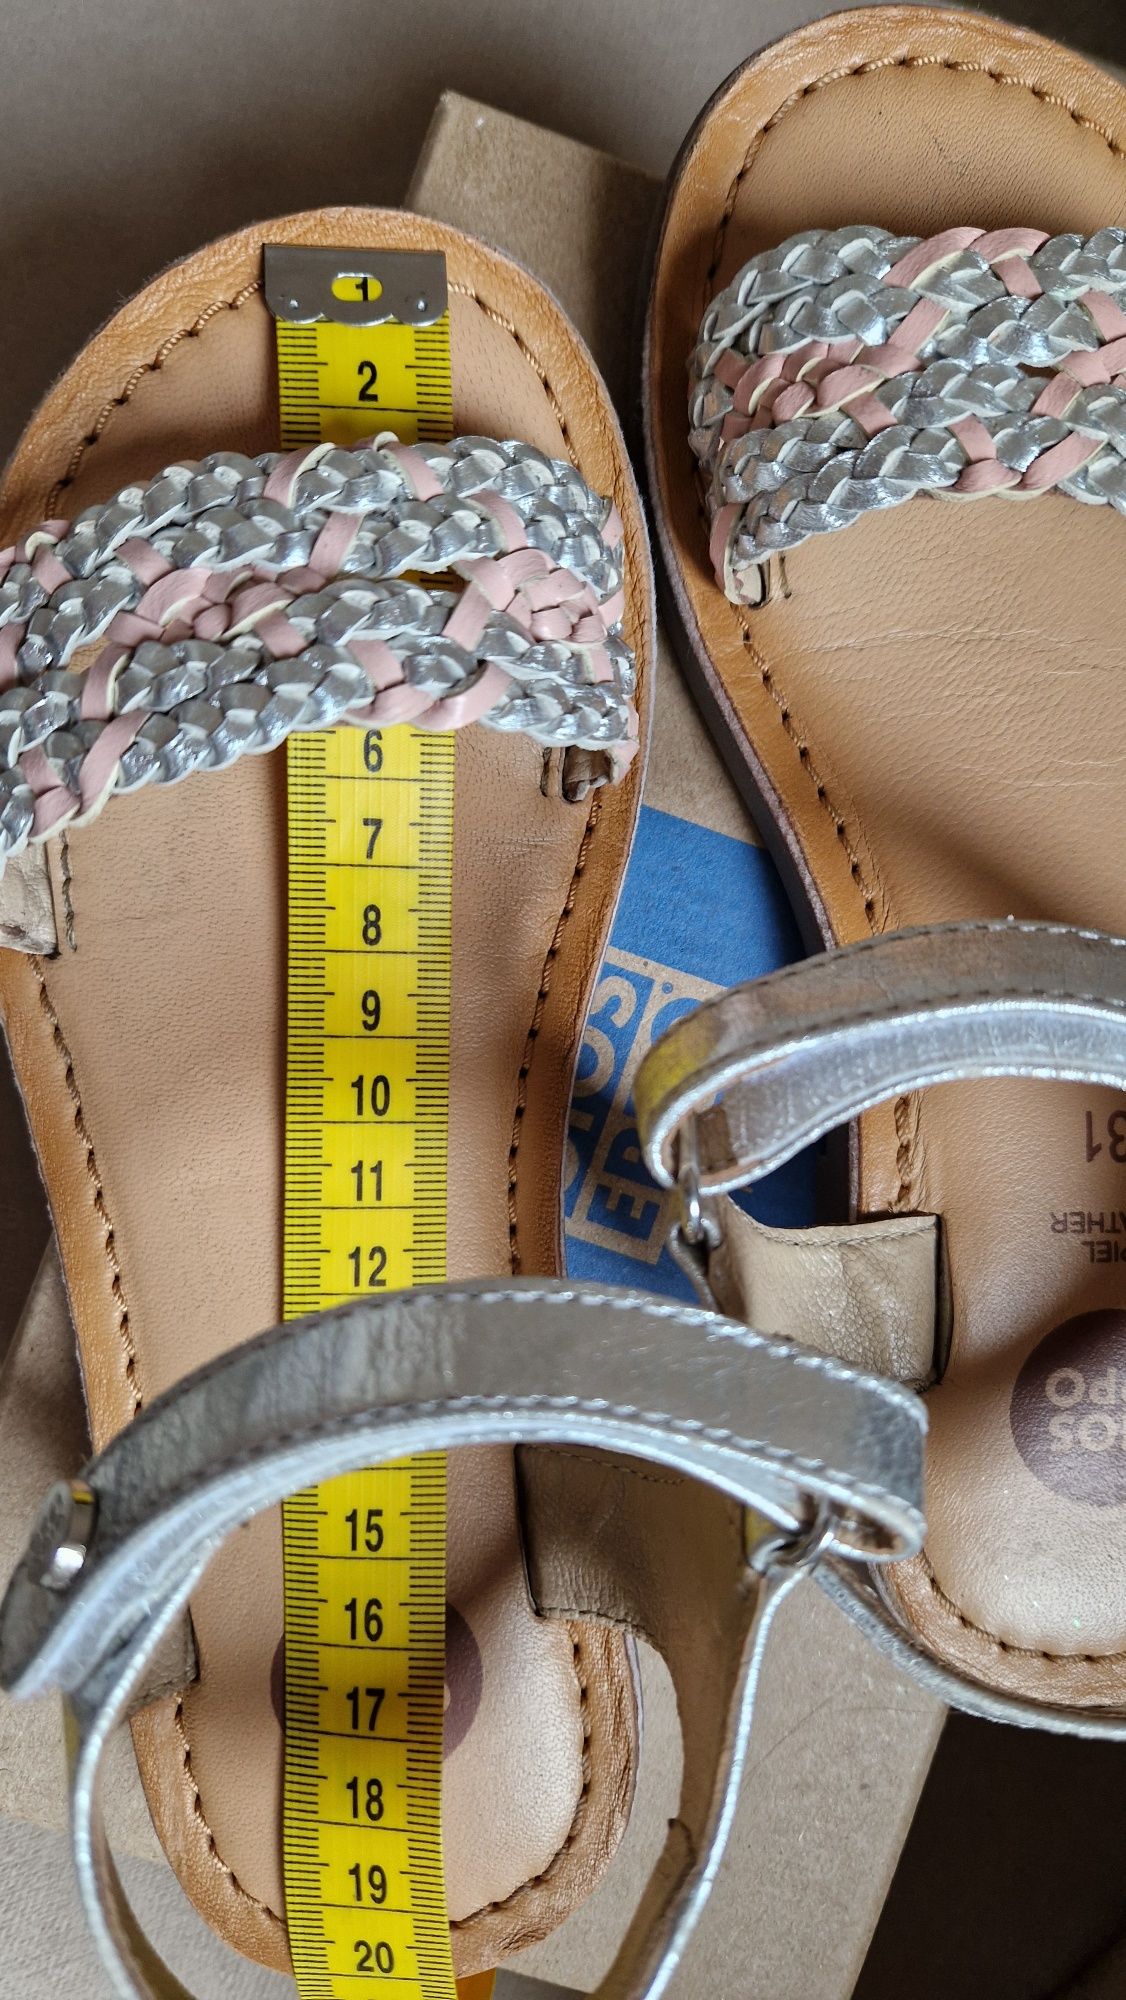 Sandale Gioseppo, marime 31 (20 cm)
Sandale din piele cu inchidere vel